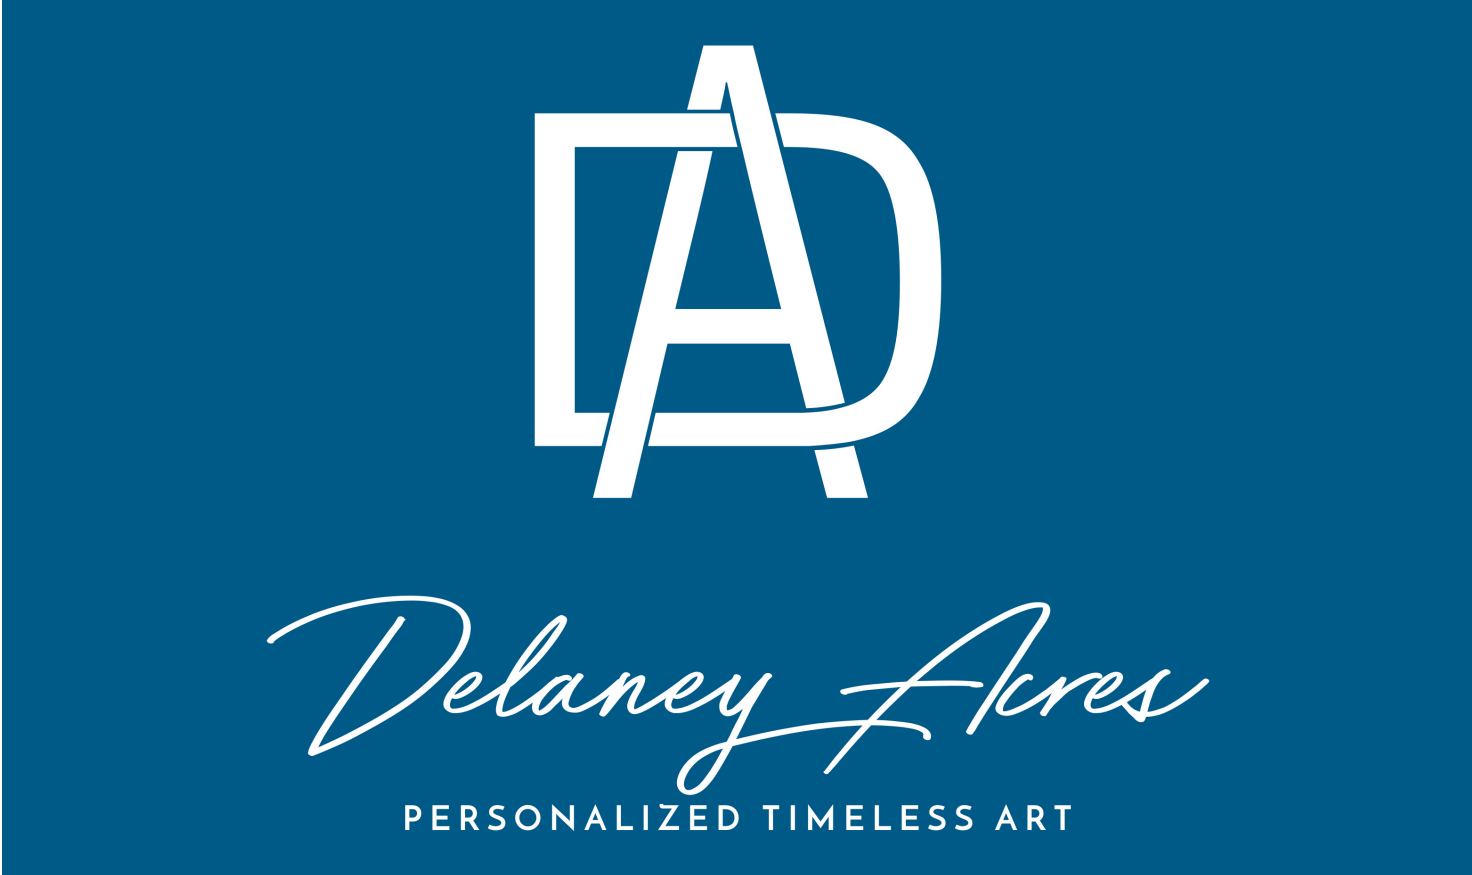 Dealney Arts